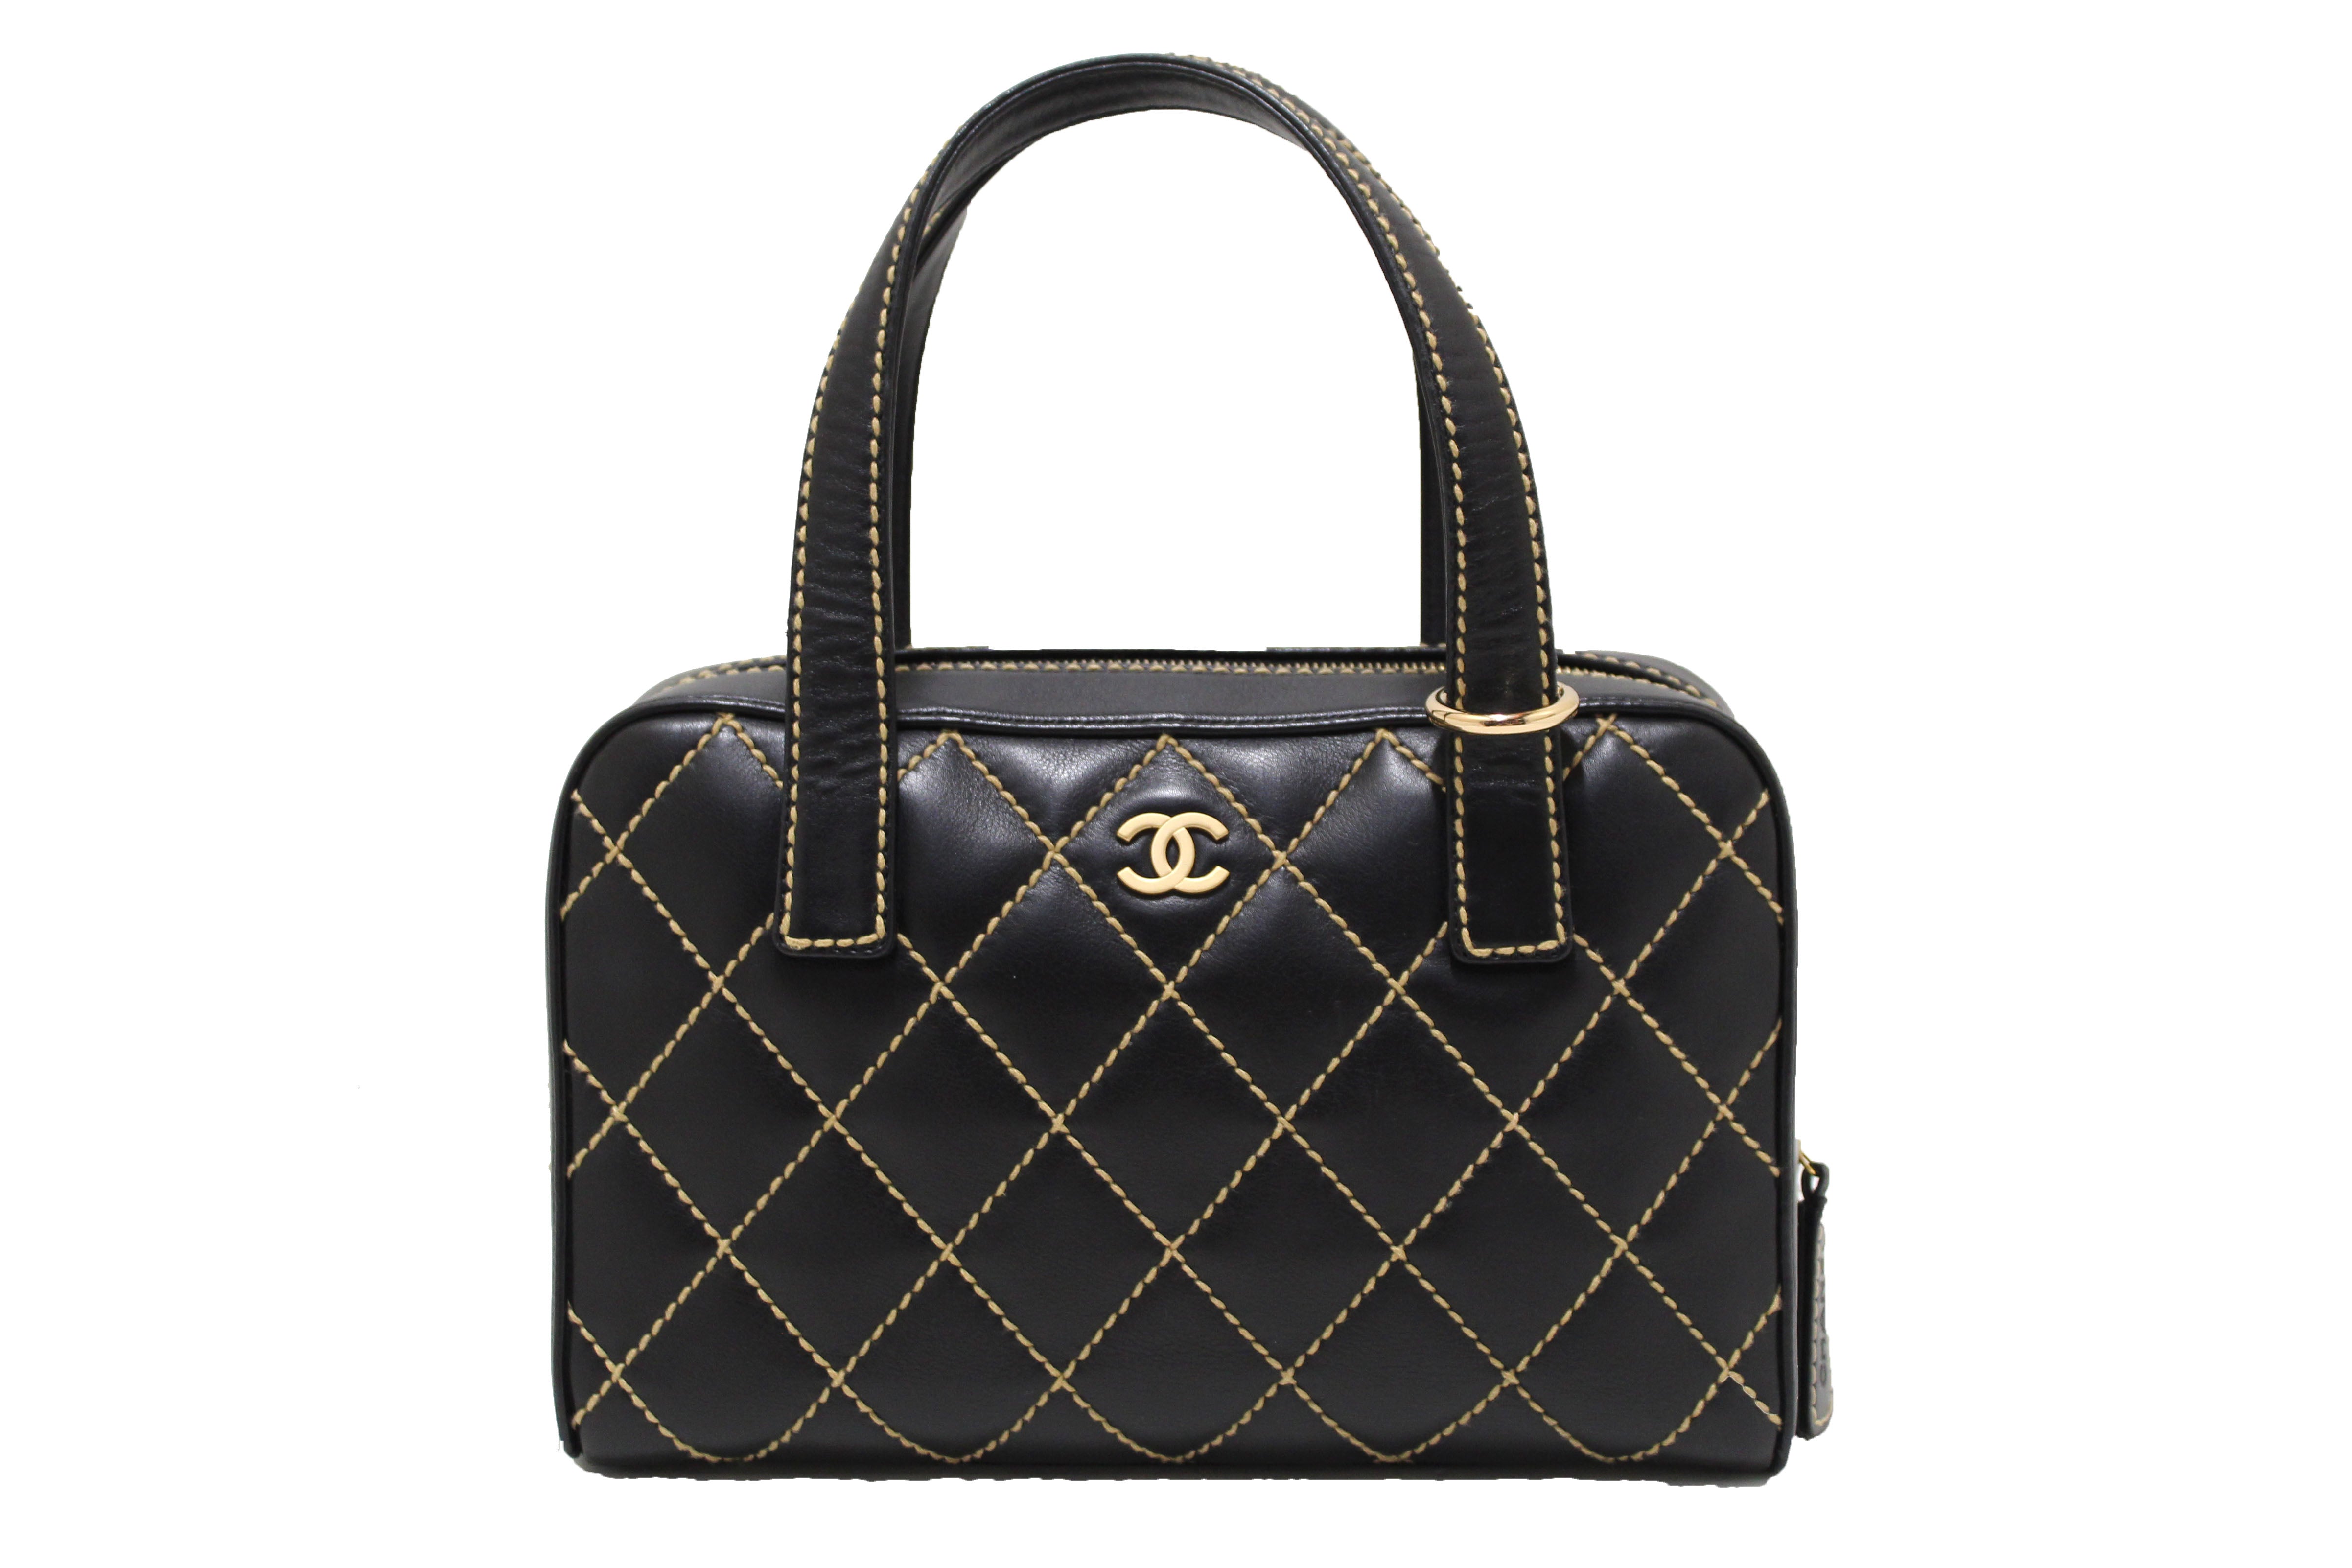 Chanel Black Quilted Leather Contrast Stitch Surpique Bowler Bag